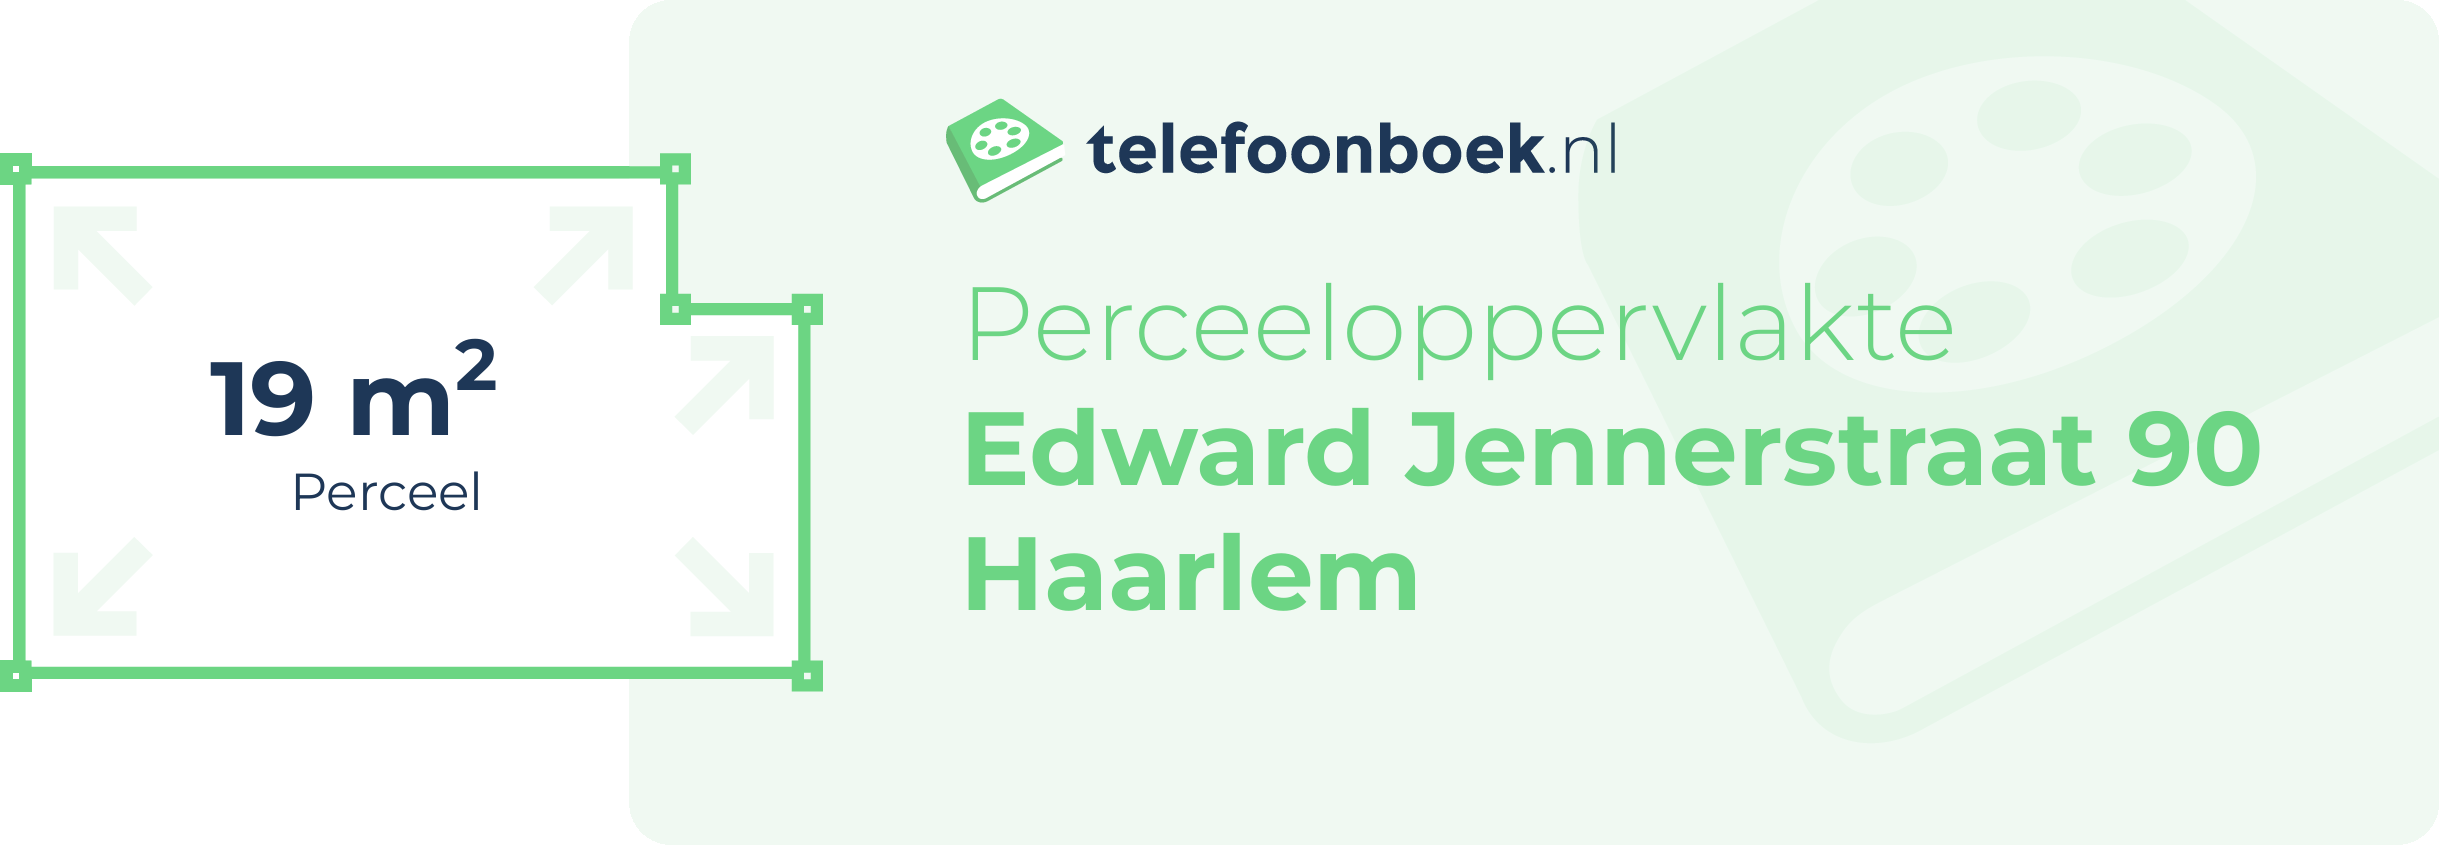 Perceeloppervlakte Edward Jennerstraat 90 Haarlem